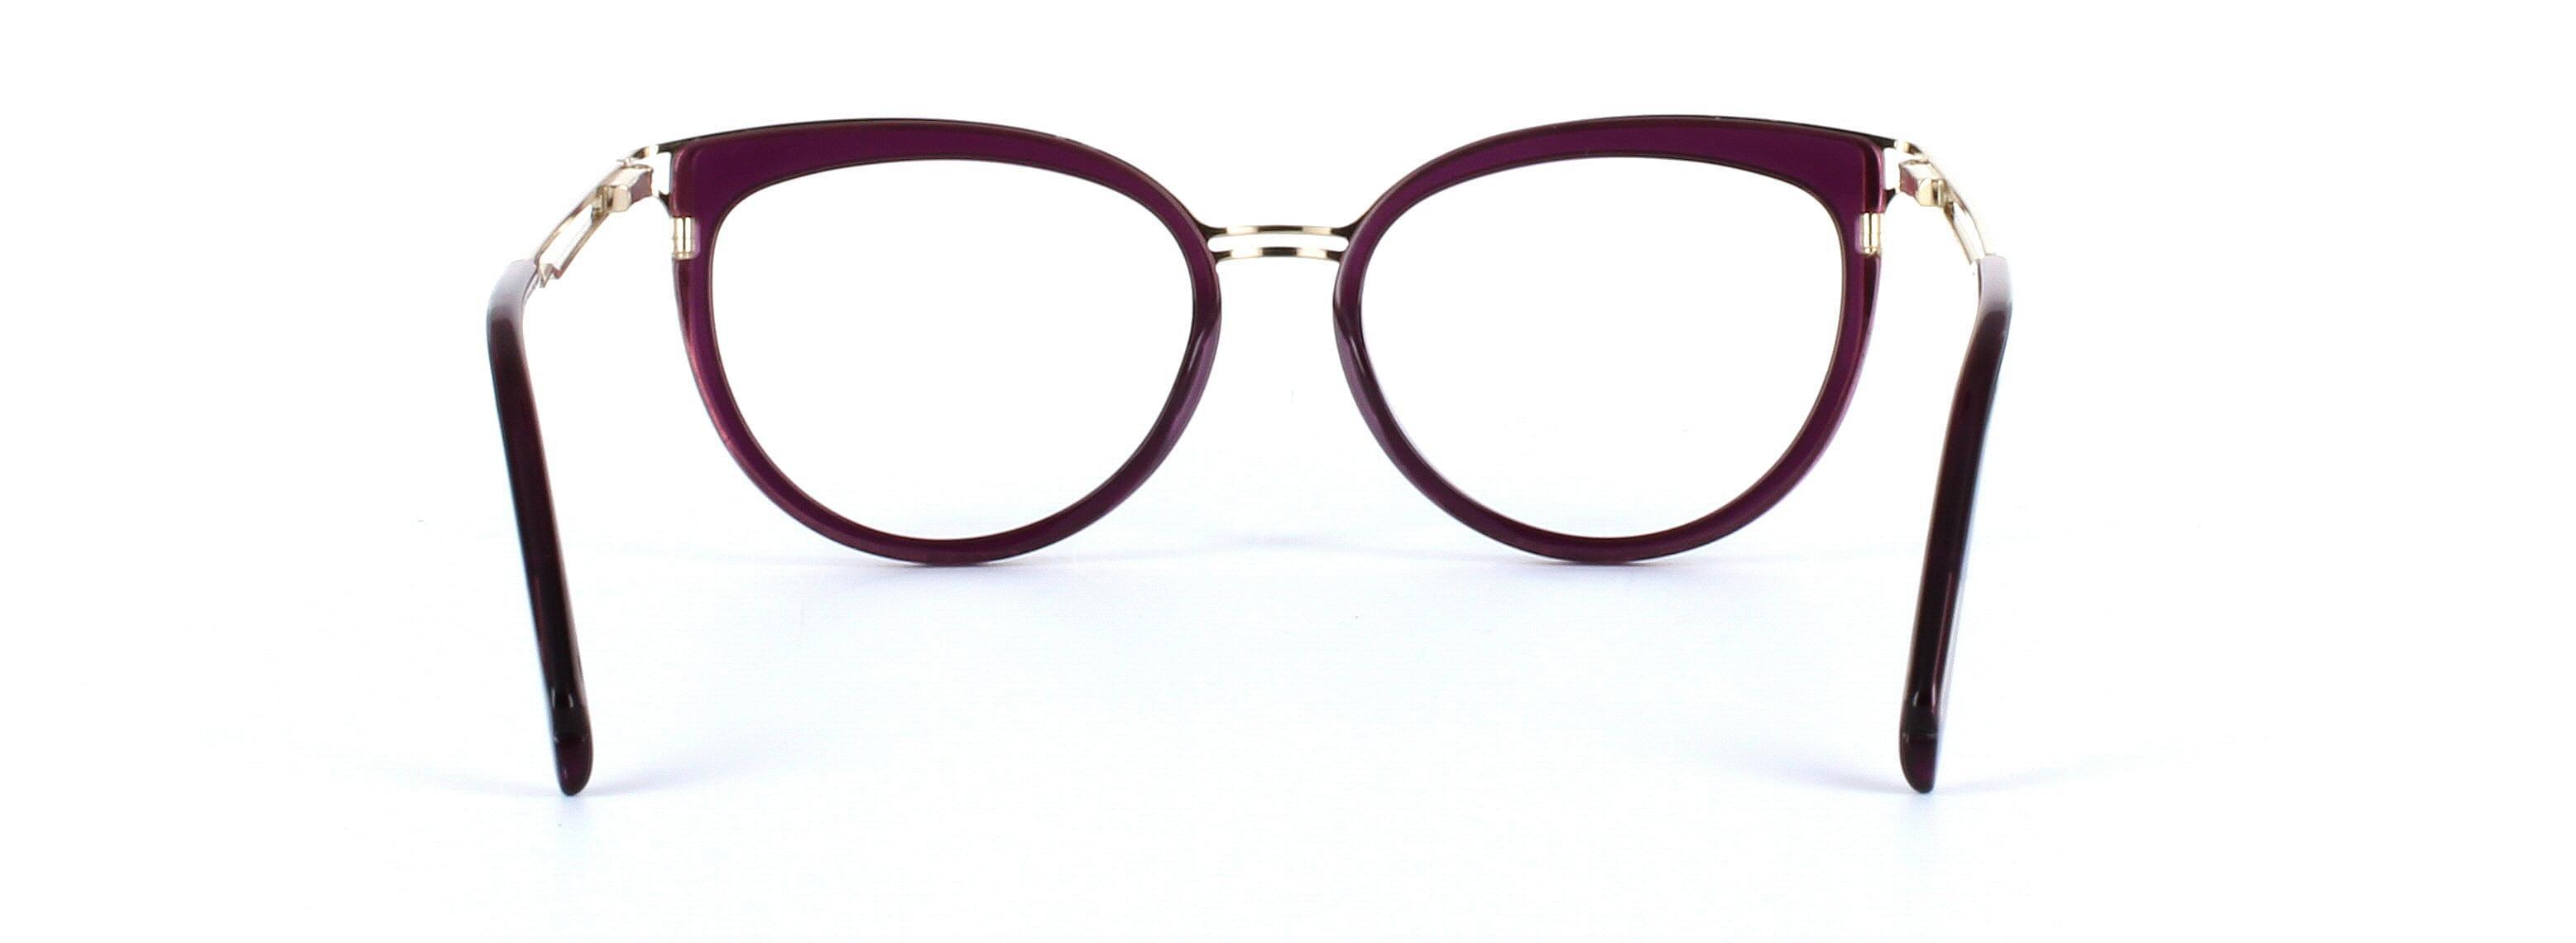 JUST CAVALLI (JC0857-081) Purple Full Rim Cat Eye Acetate Glasses - Image View 3